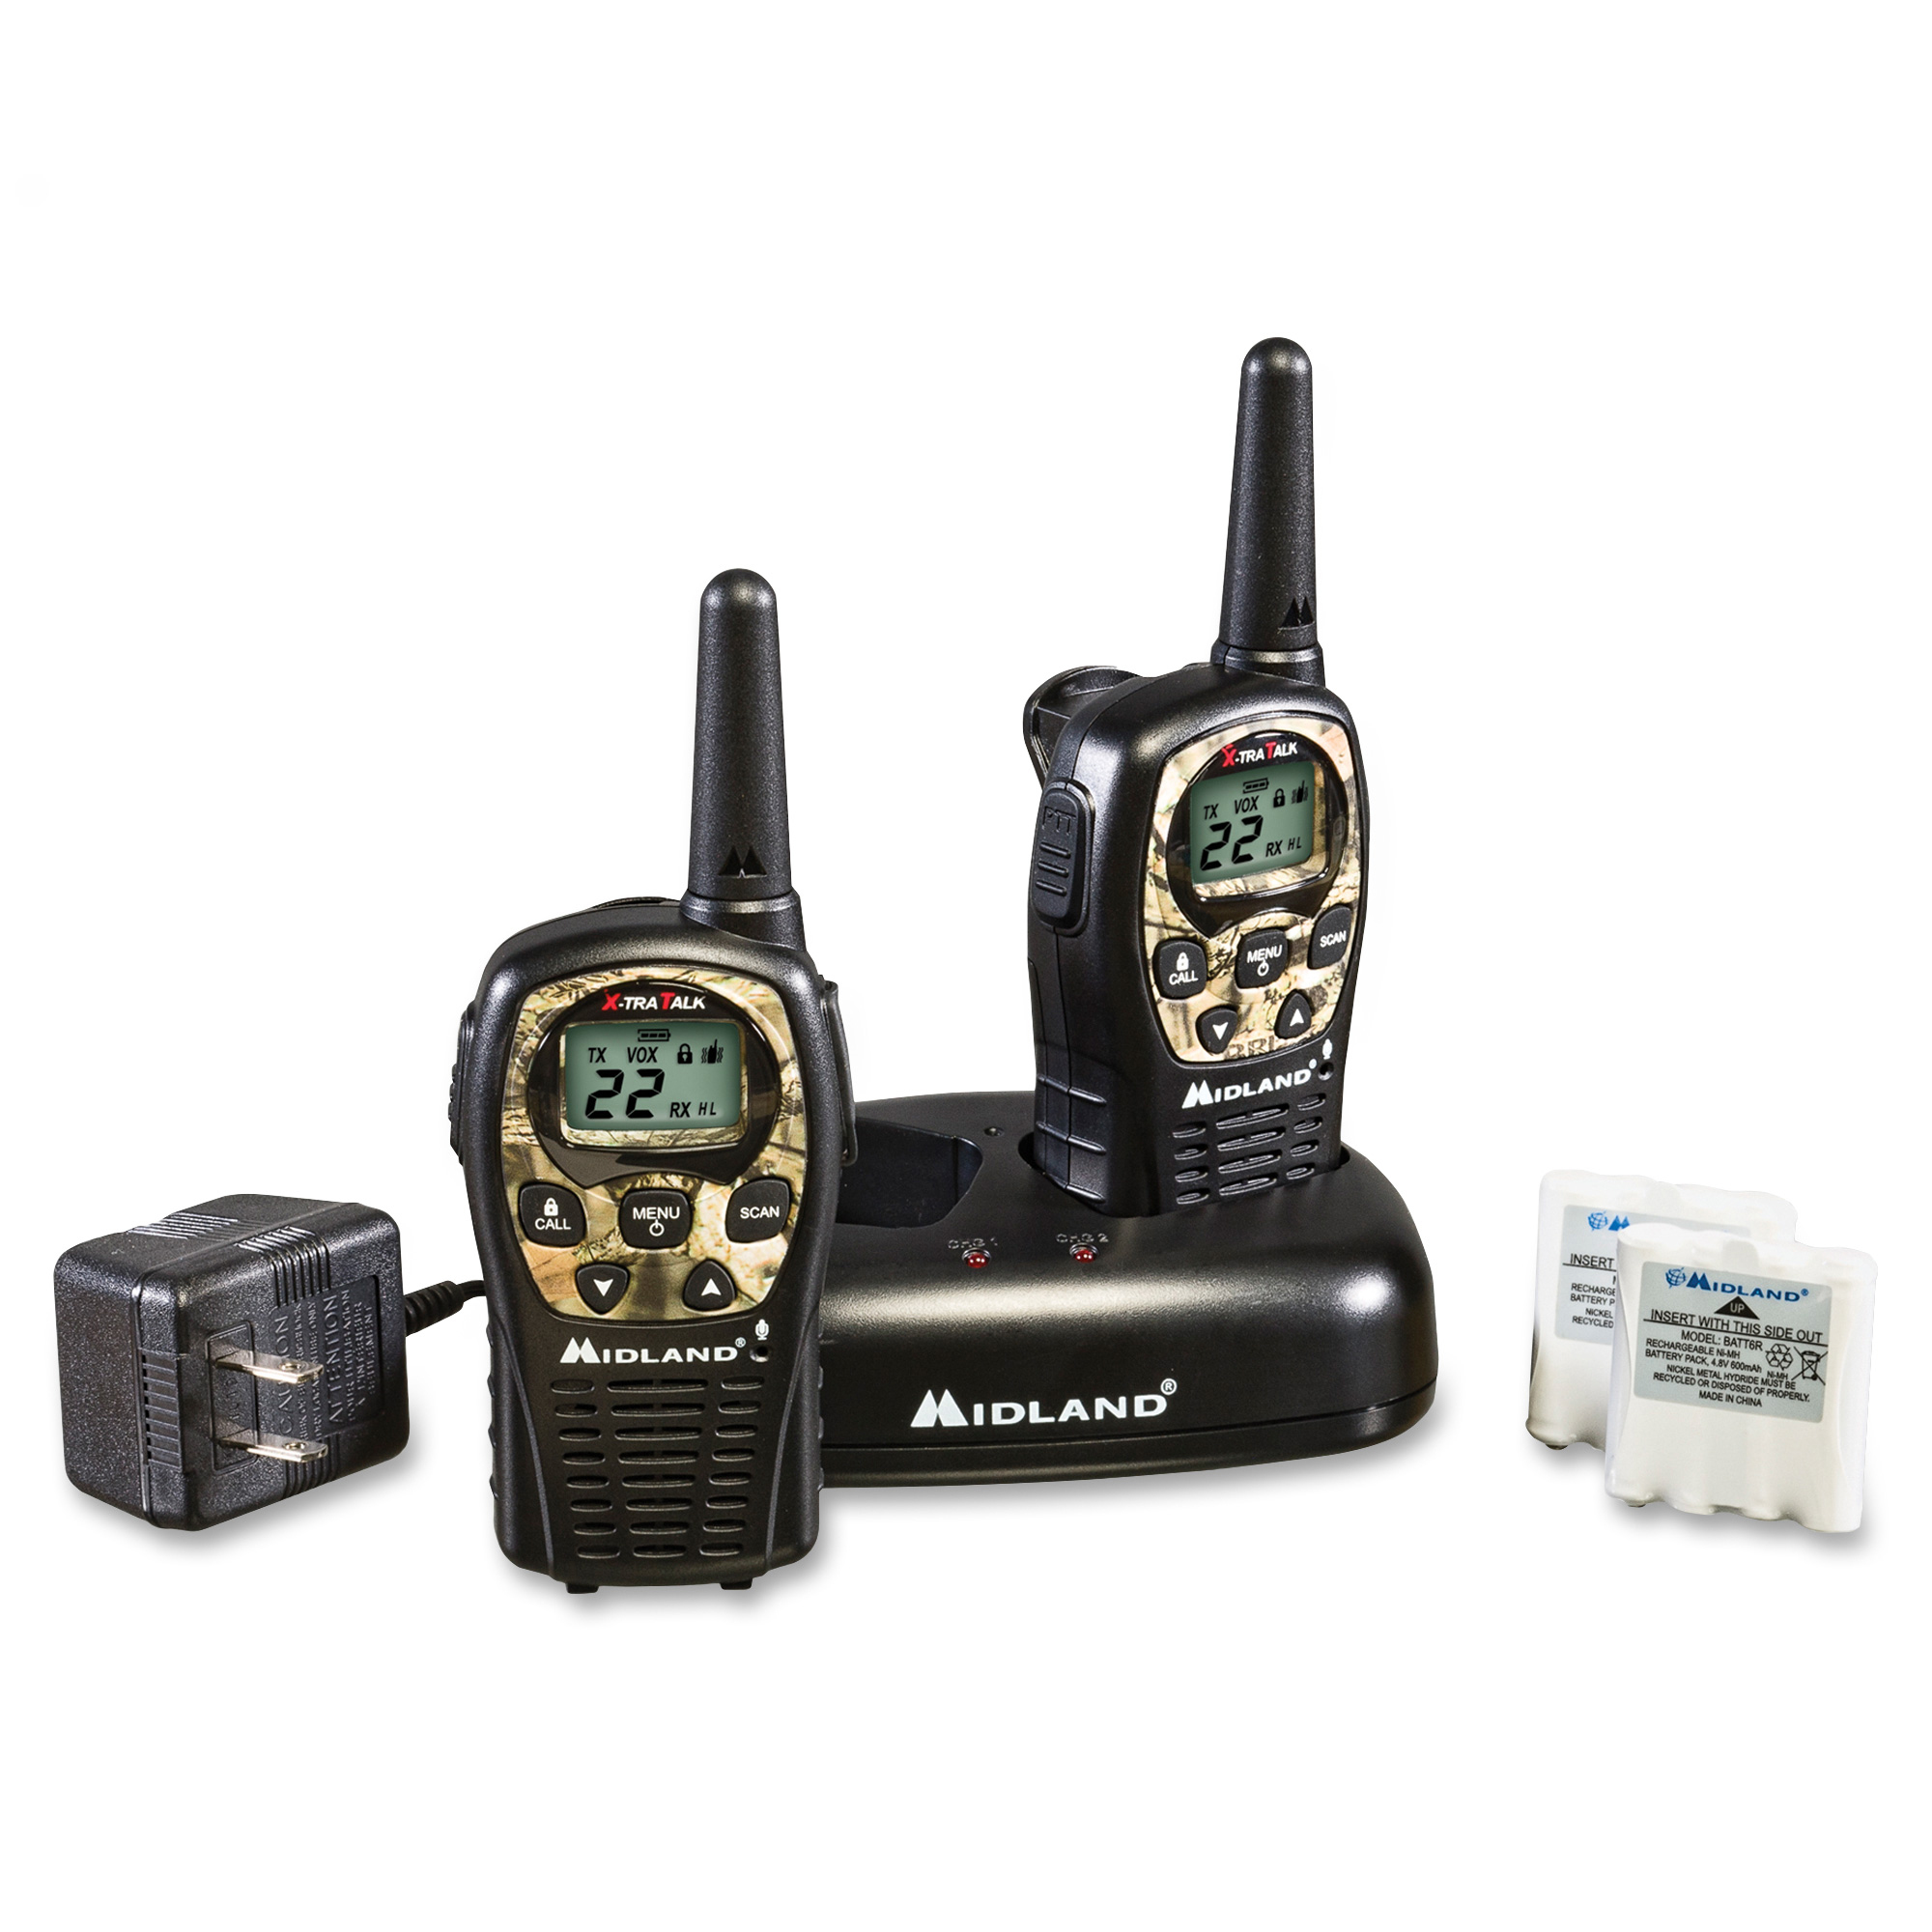 Midland LXT535VP3 FRS Walkie Talkie Long Range Two Way Radio with NOAA Weather Scan   Alert Channel Scan, Silent Operation (Mossy Oak Camo, Radios - 4